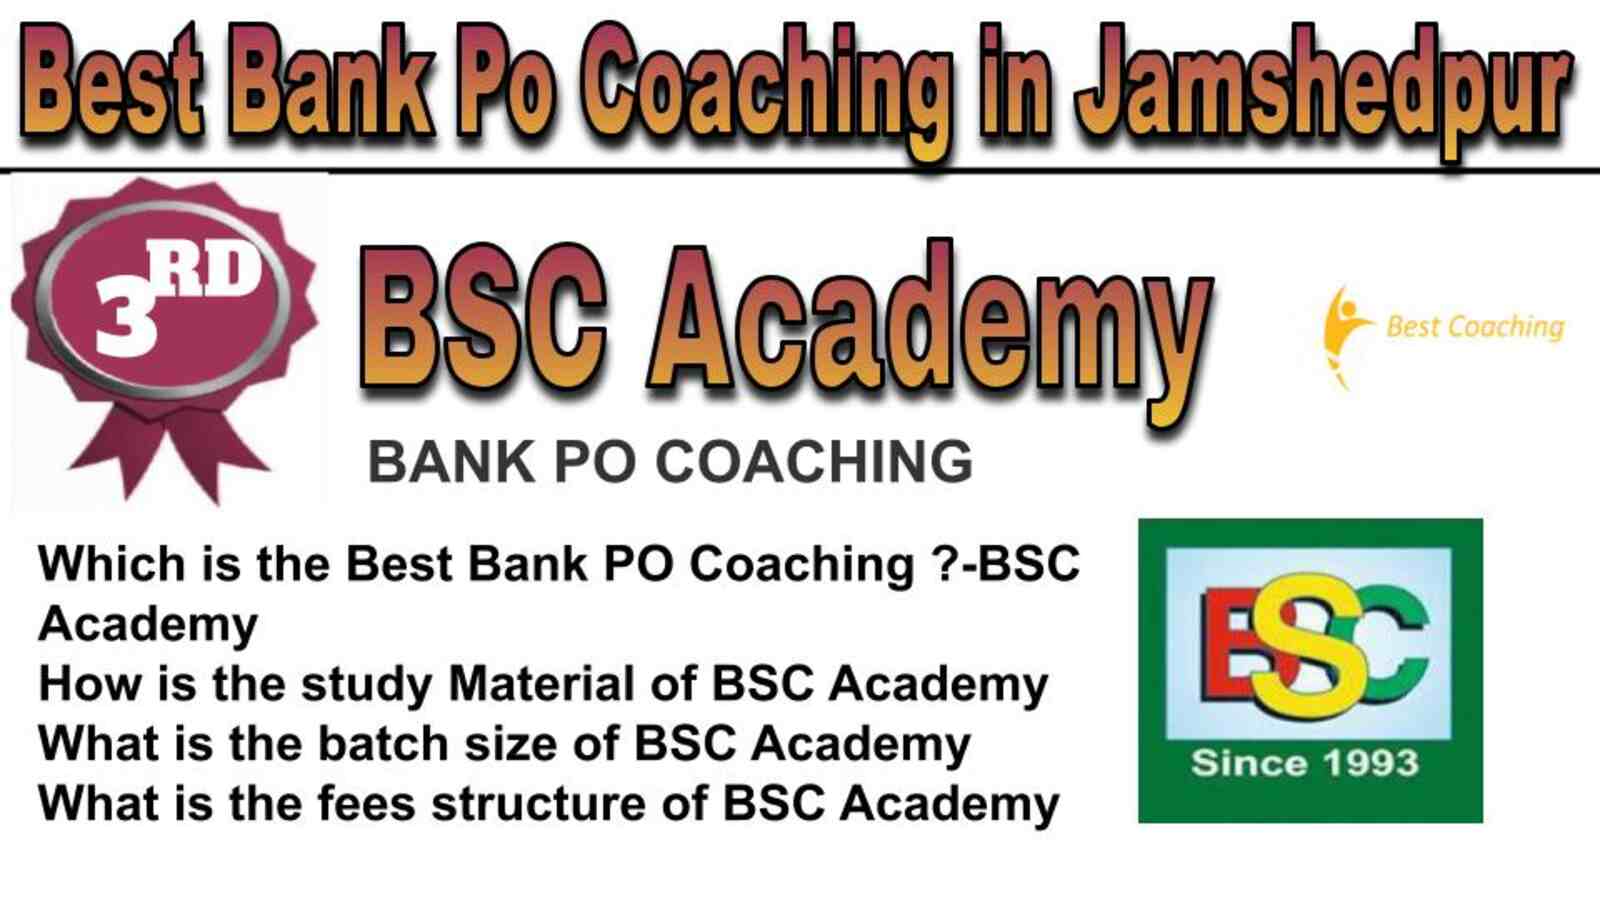 Rank 3 best bank po coaching in Jamshedpur